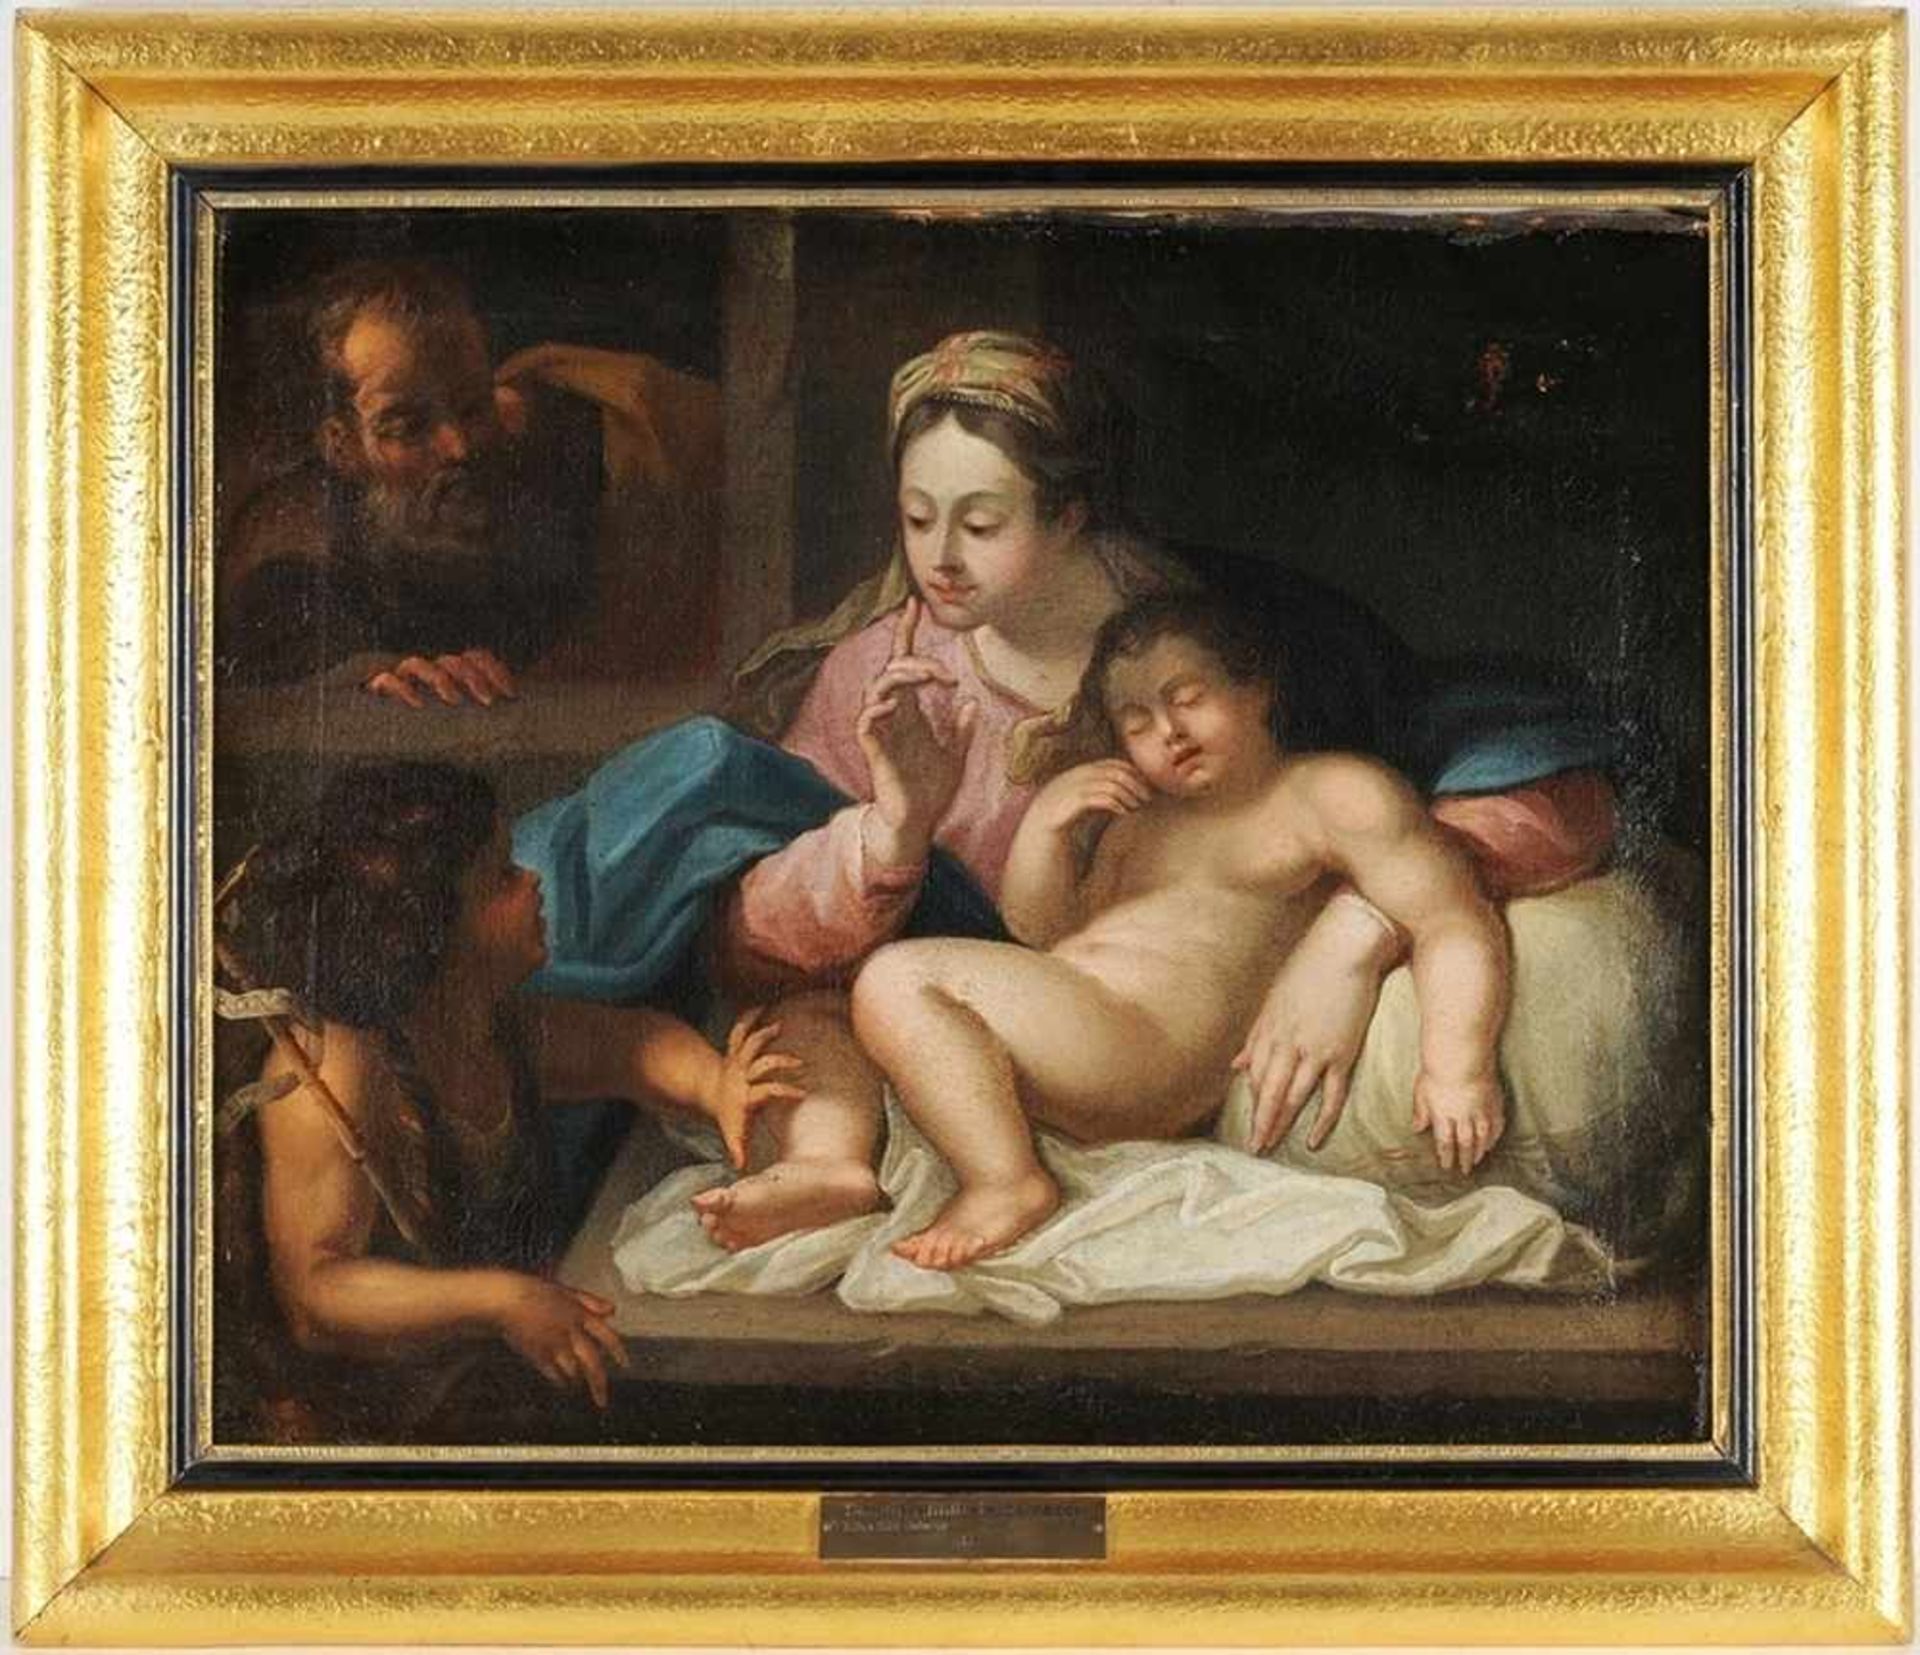 Carracci, Annibale Umkreis (um 1560 Bologna - 1609 Rom) Öl/Lwd. "La Madonna del silenzio", die